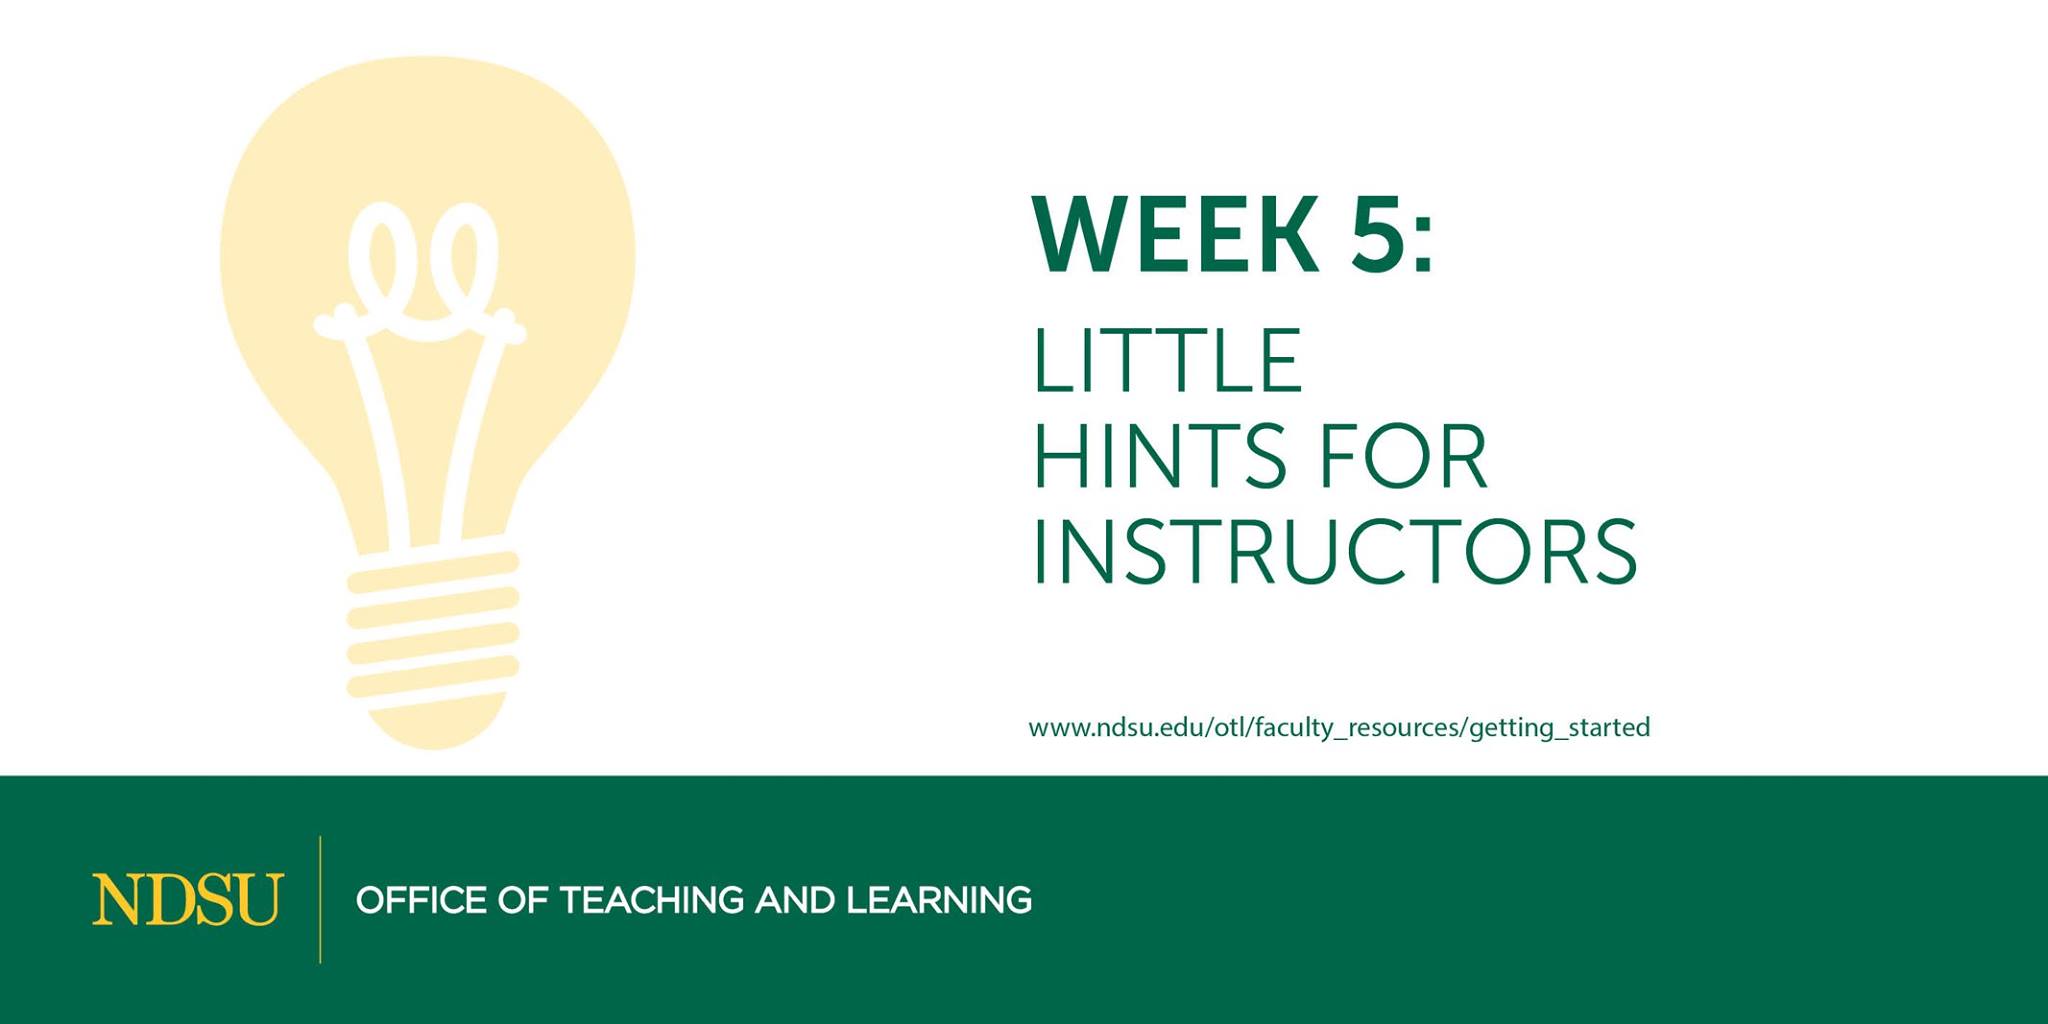 Week 5 Little Hints for Instructors